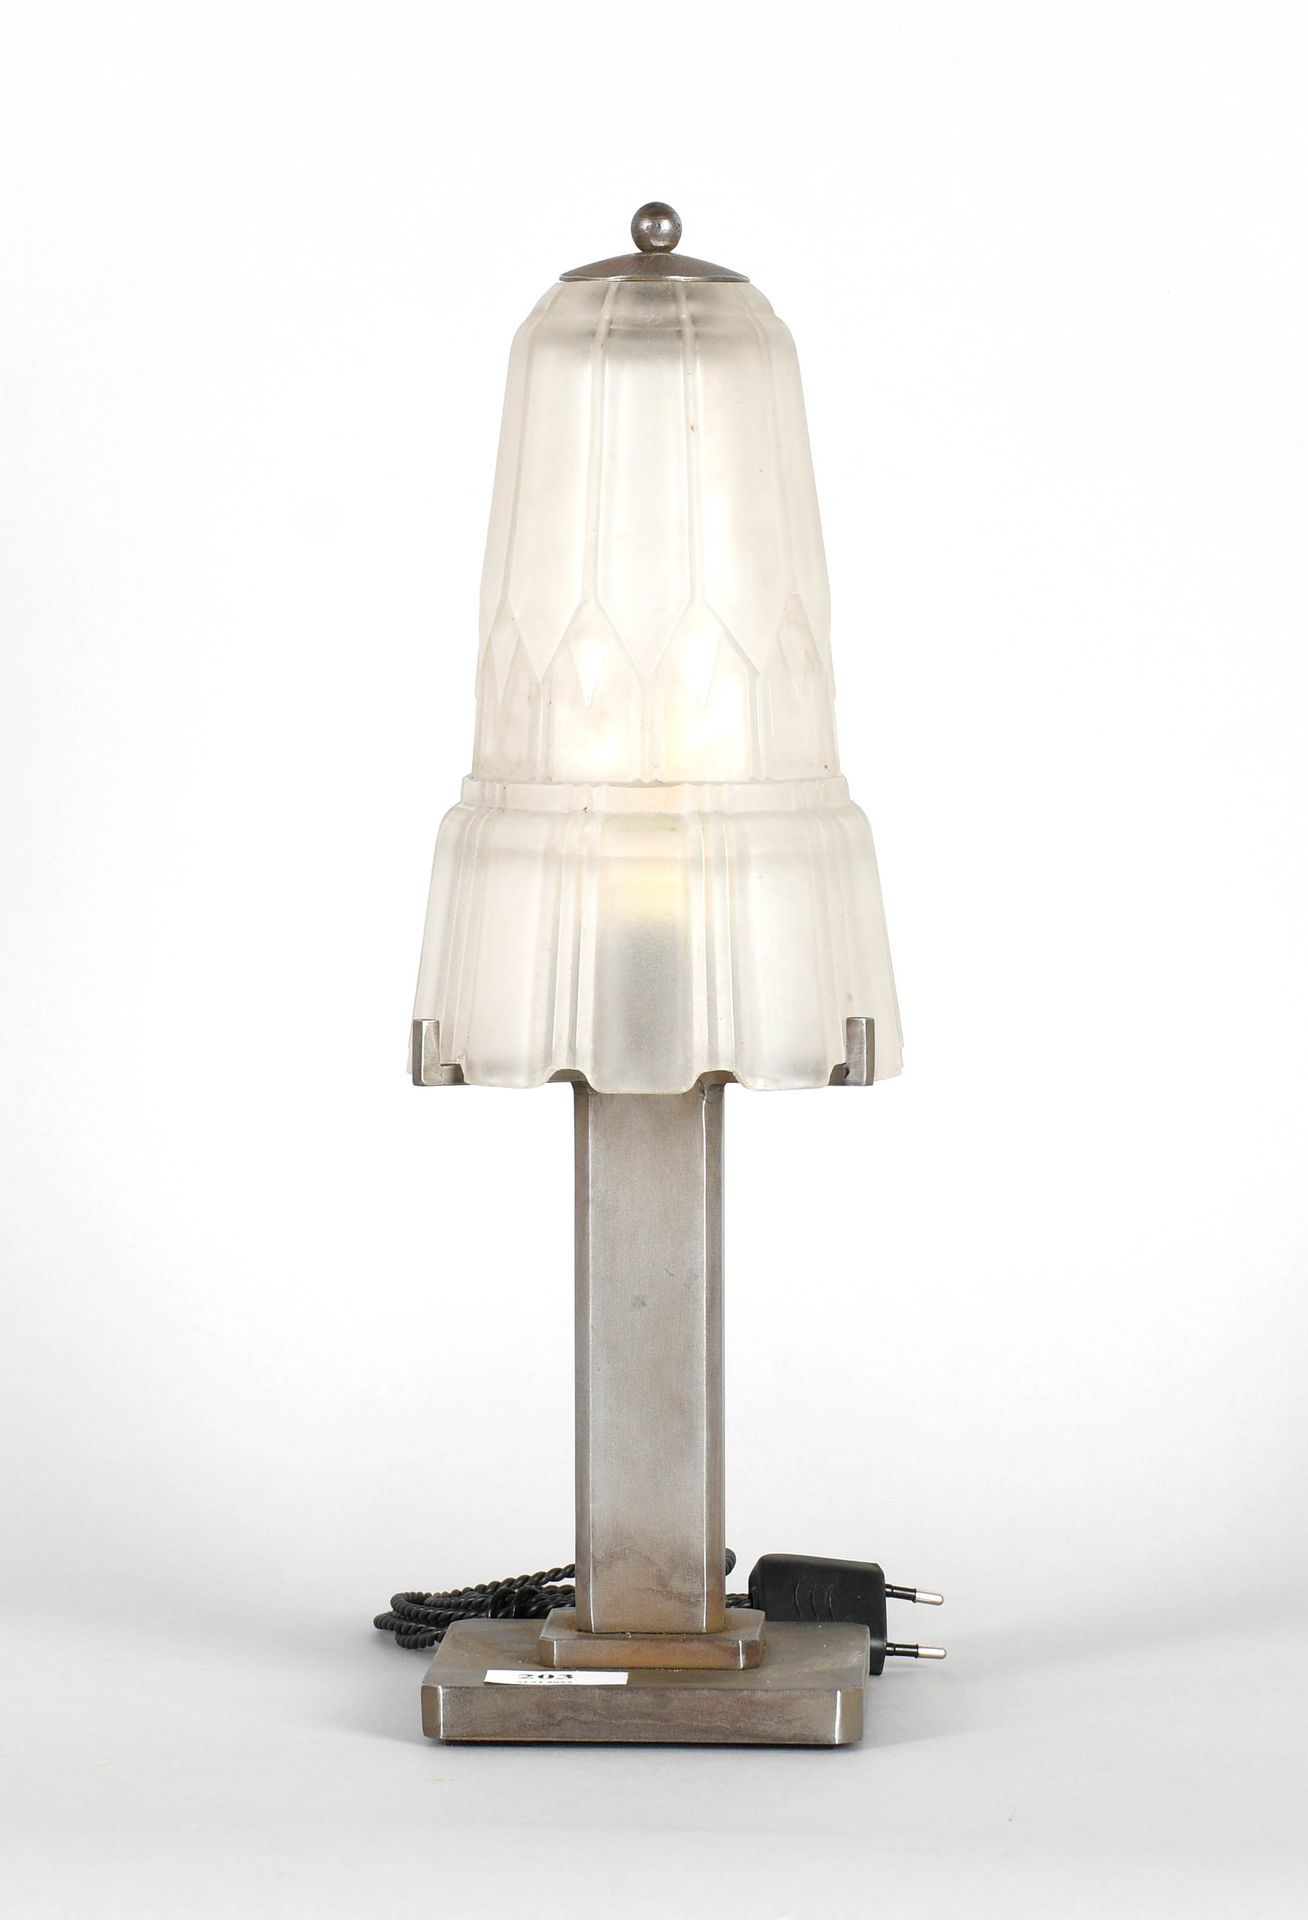 Null 装饰艺术灯，磨砂模制玻璃 "喷泉 "灯罩和镀镍金属底座 - 翻新的线路

高度：41厘米。